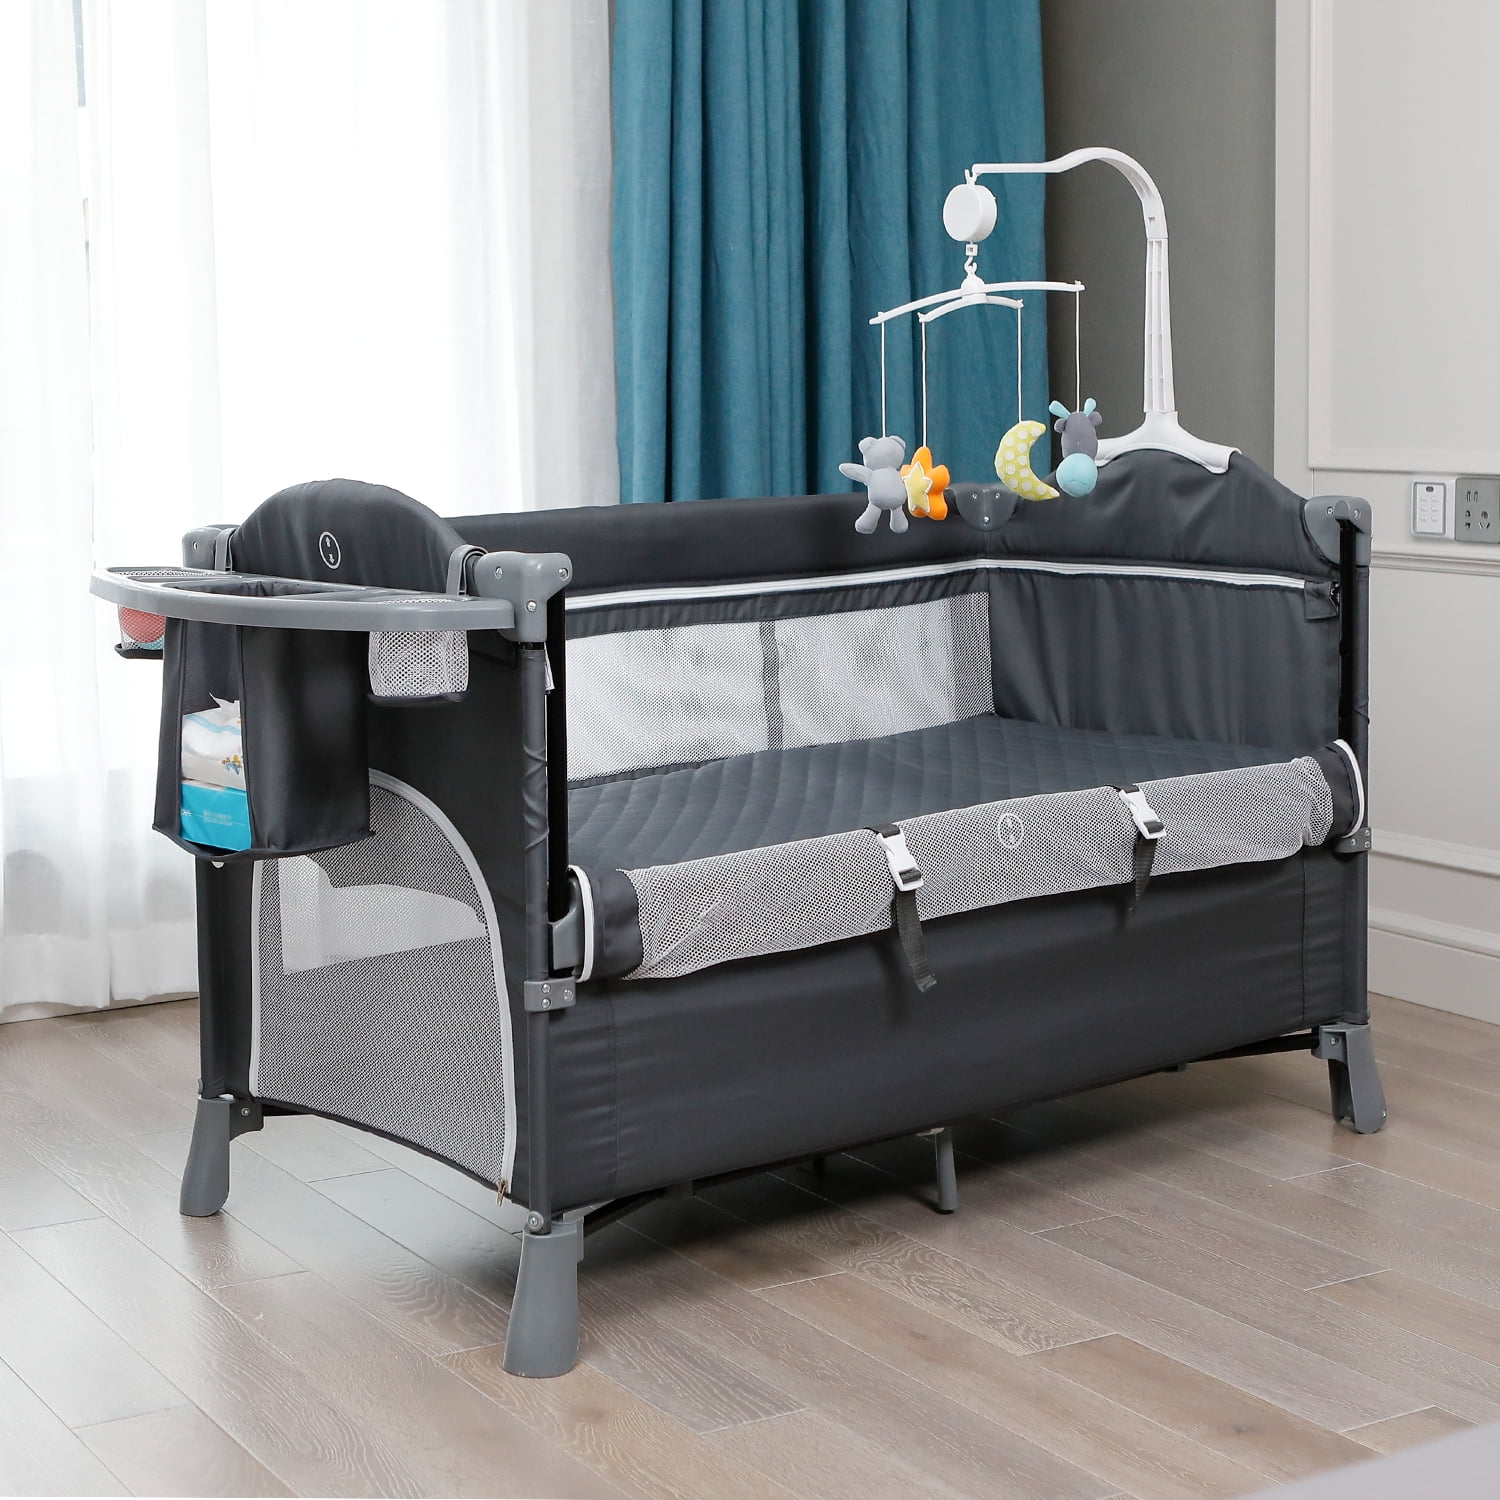 JOYMOR 3 in 1 Foldable Baby Bedside Sleeper Bassinet Bed with 